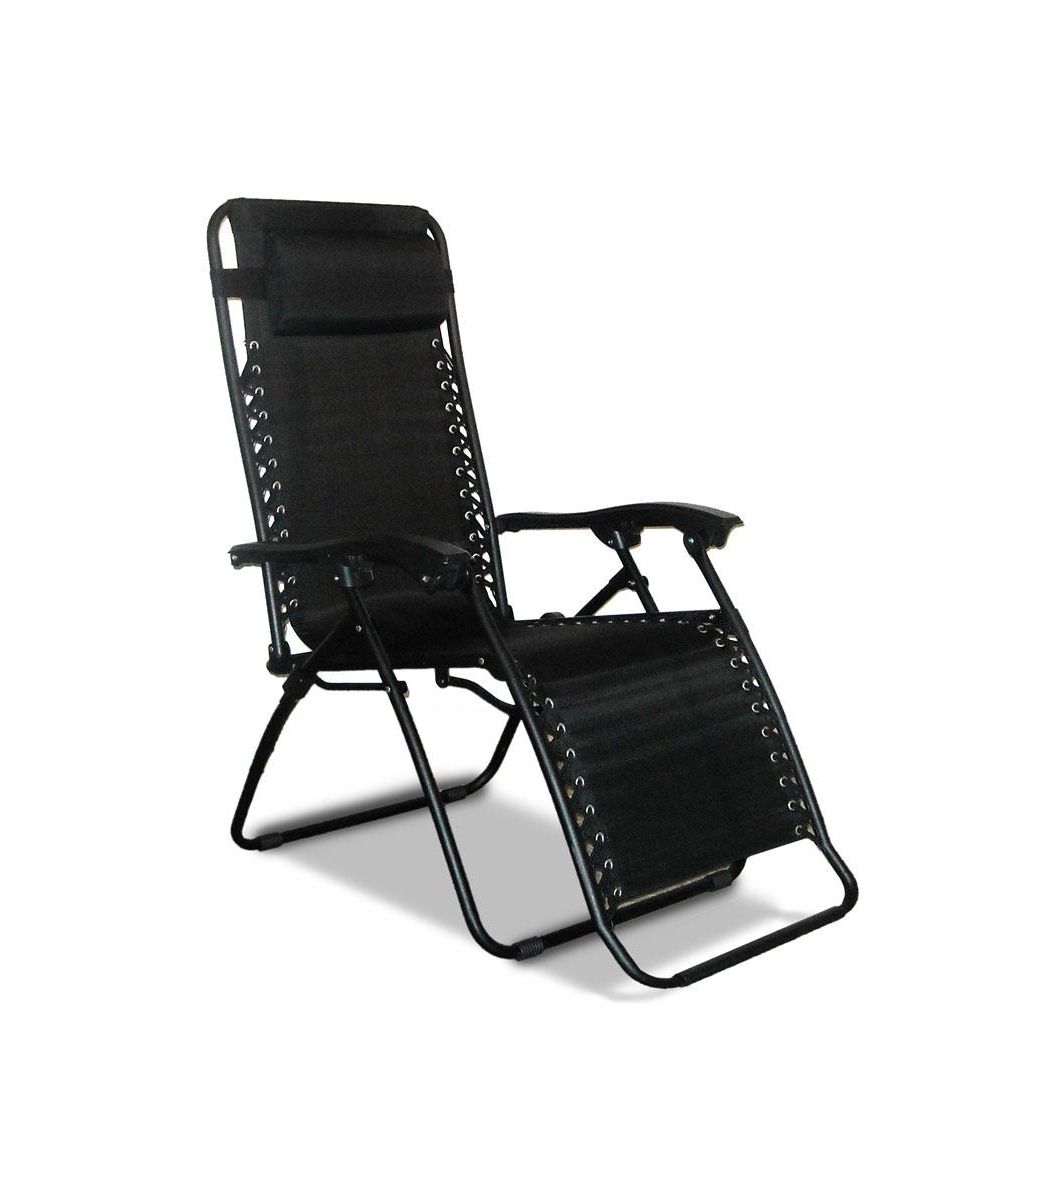 Caravan Sportsbeige Zero Gravity Chairs With Regard To Well Known Caravan Canopy Black Zero Gravity Chair (View 7 of 25)